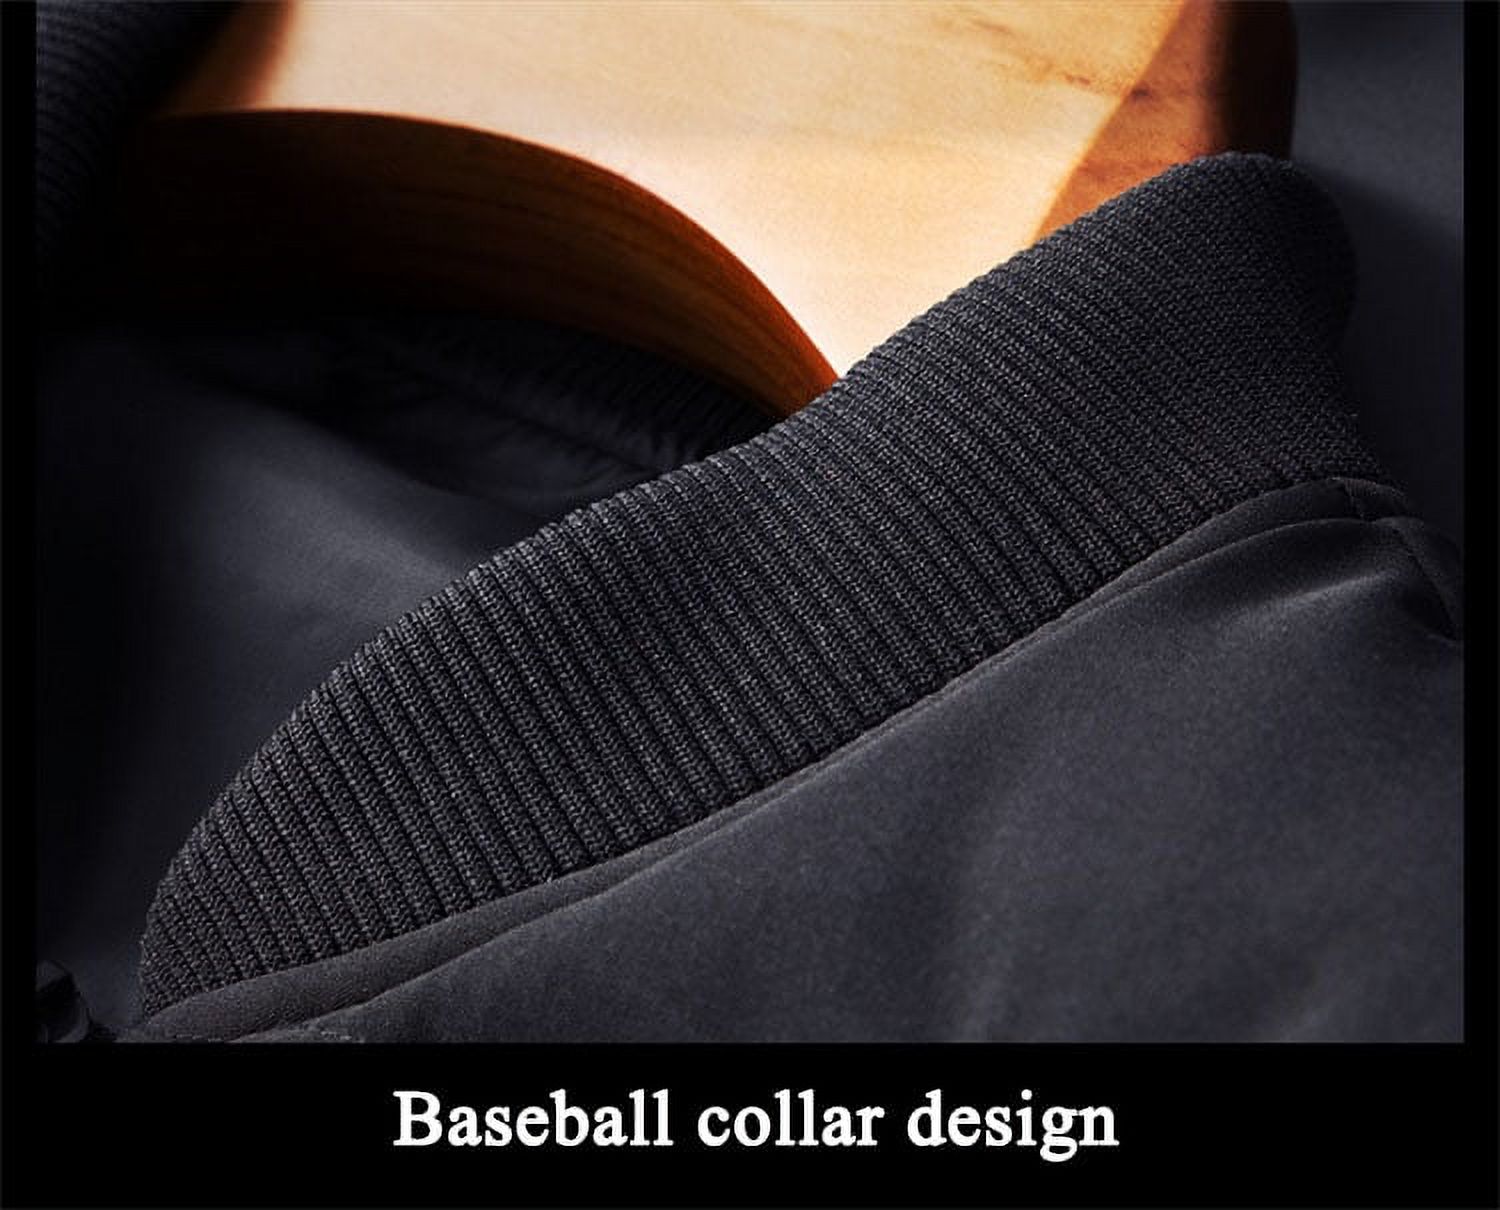 Men's Thicken Cotton Jacket, Winter Baseball Collar Jacket Warm Coat Sweatshirt Jacket Outwear Coat, Winter Cotton Clothing Heating Cotton Jacket with Embroidery Design - image 5 of 8